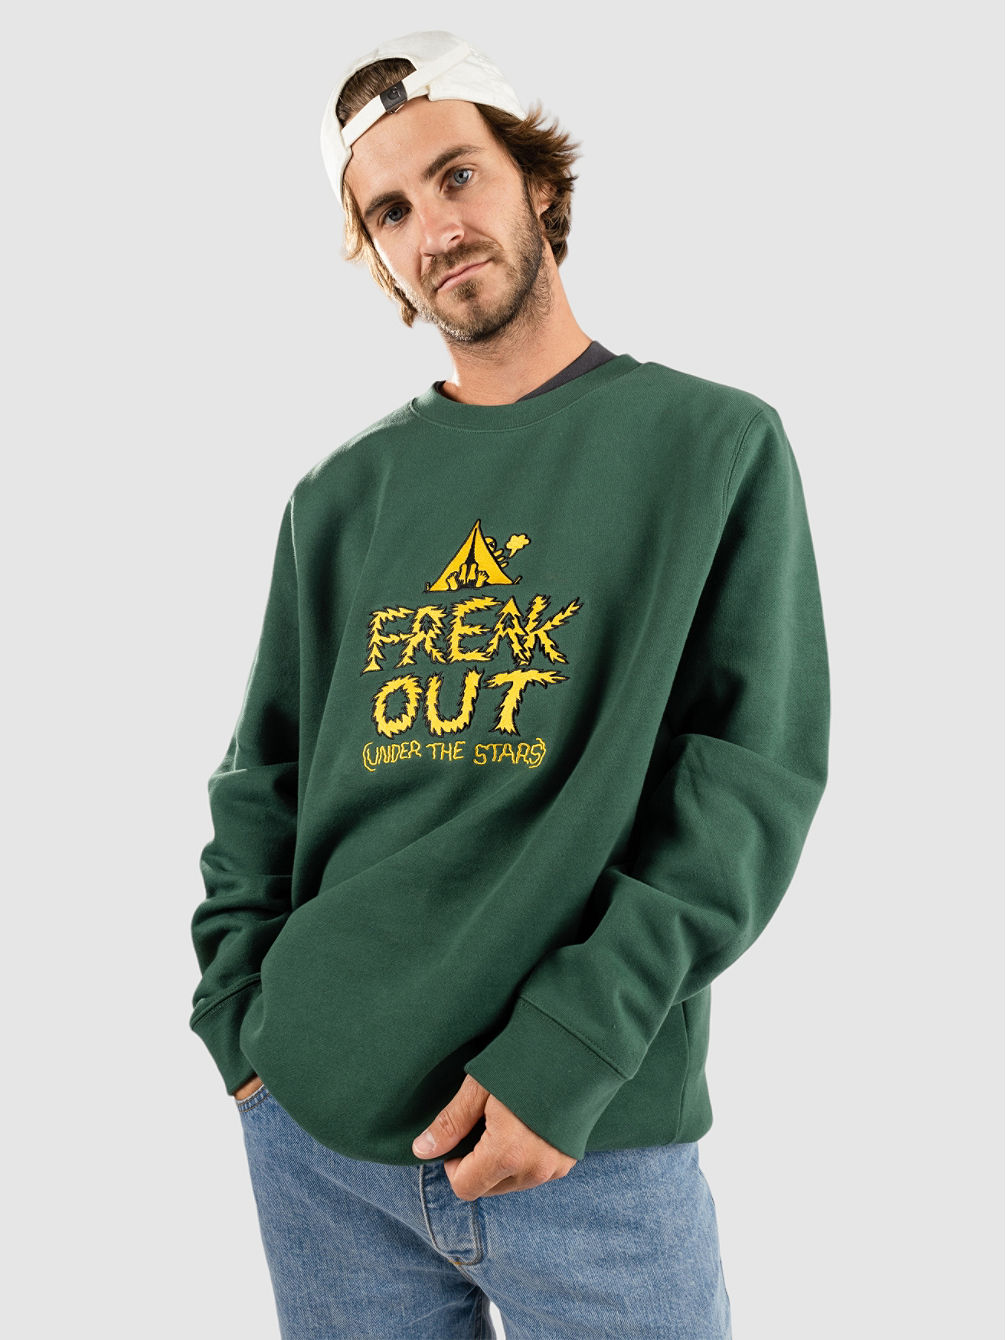 Freakout Crew Neck Sweater